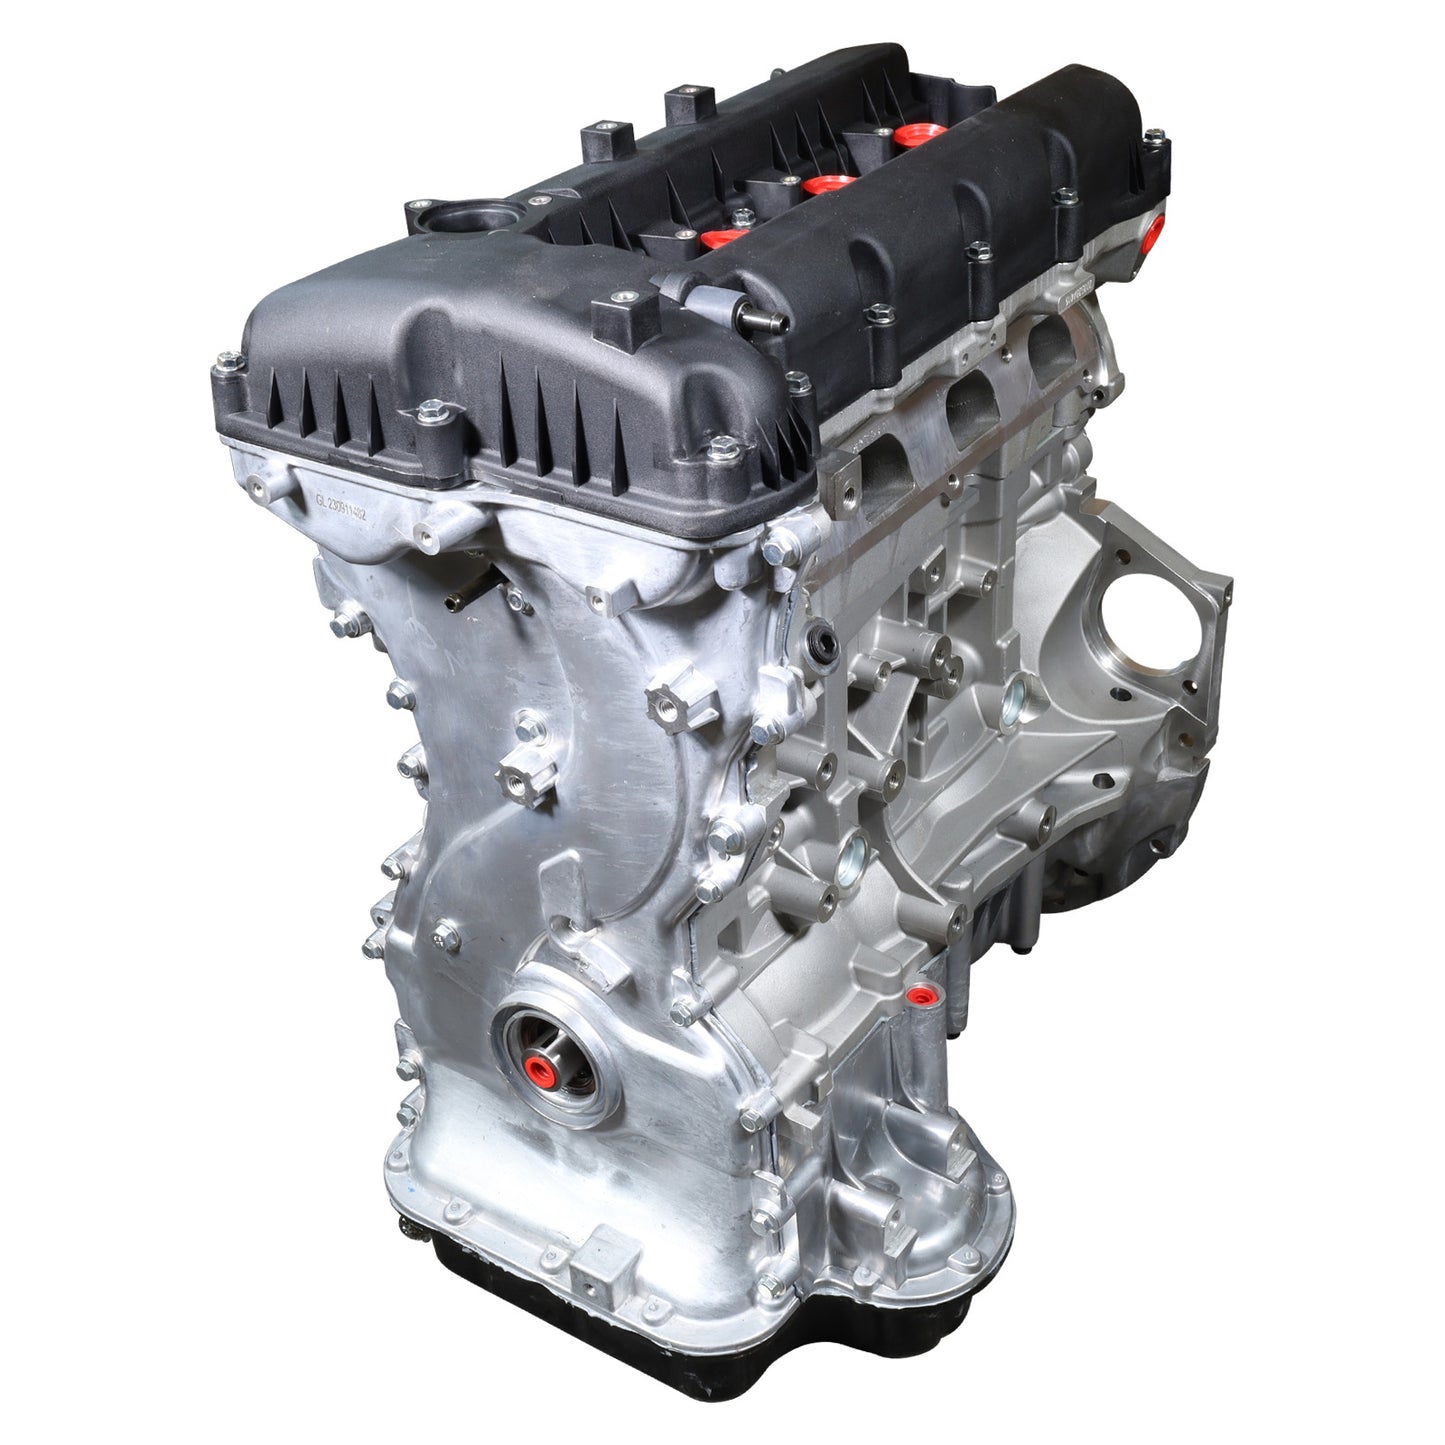 Brand New 2.4 Petrol Long Engine G4KG suit Hyundai iLoad & iMax